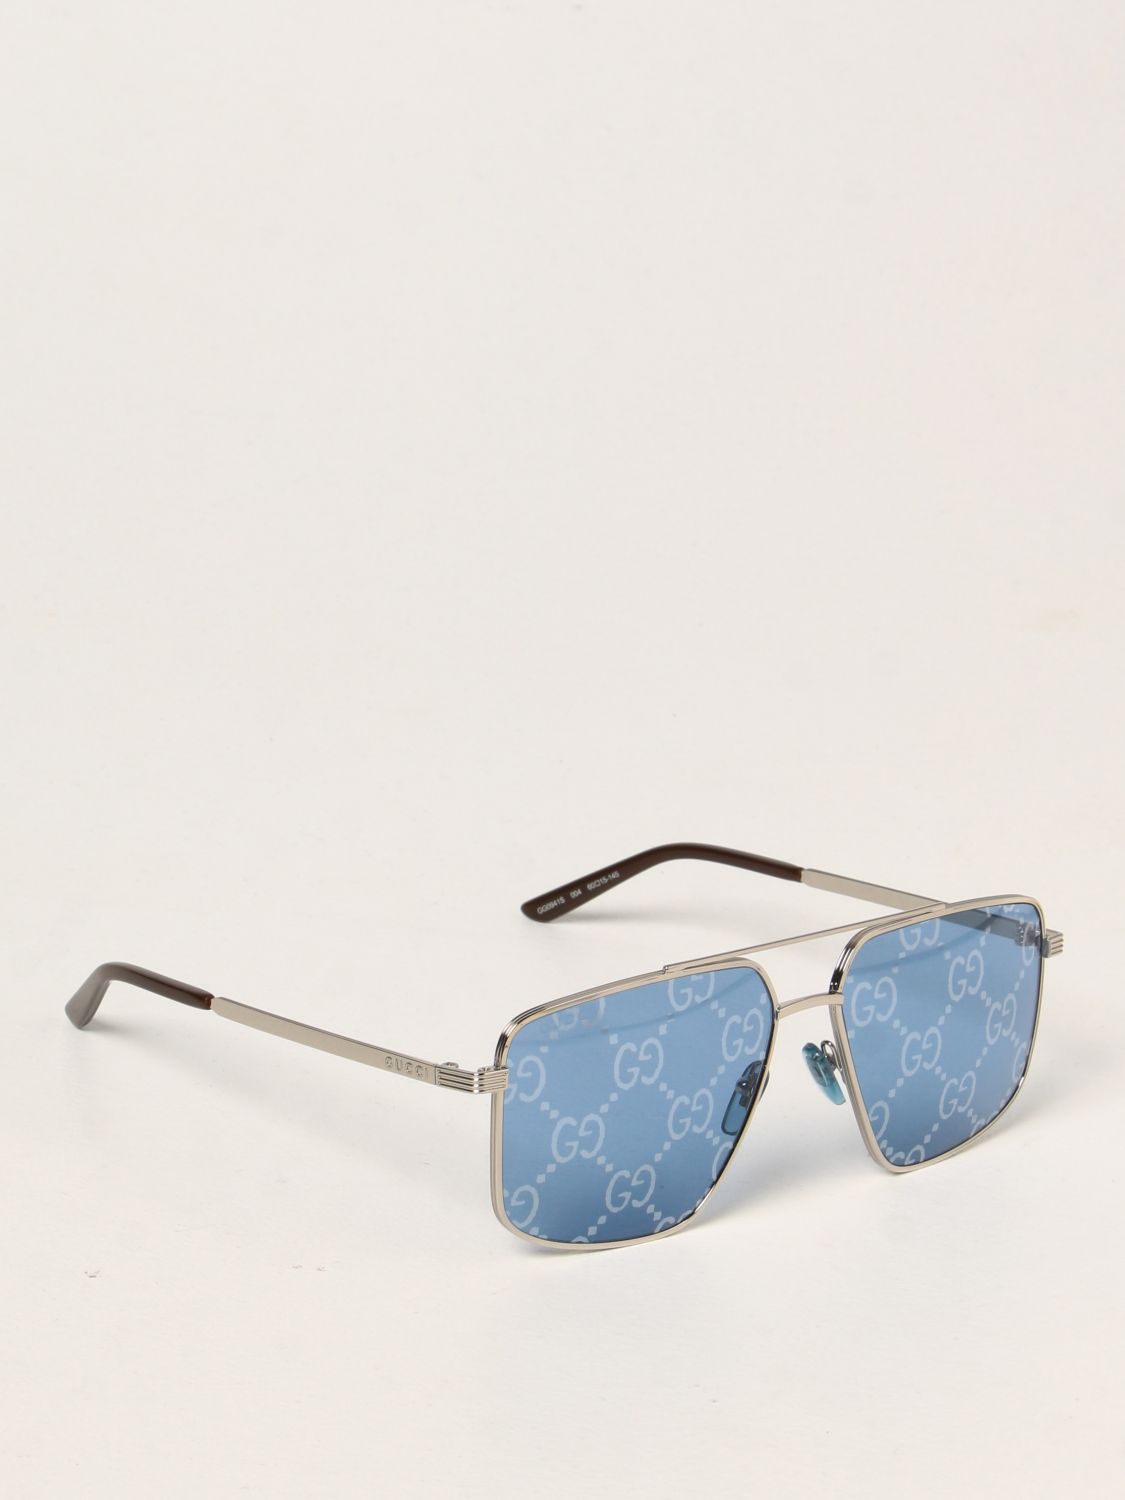 Clam alleen Voorloper GUCCI: metal sunglasses - Blue | Gucci sunglasses GG0941S online on  GIGLIO.COM